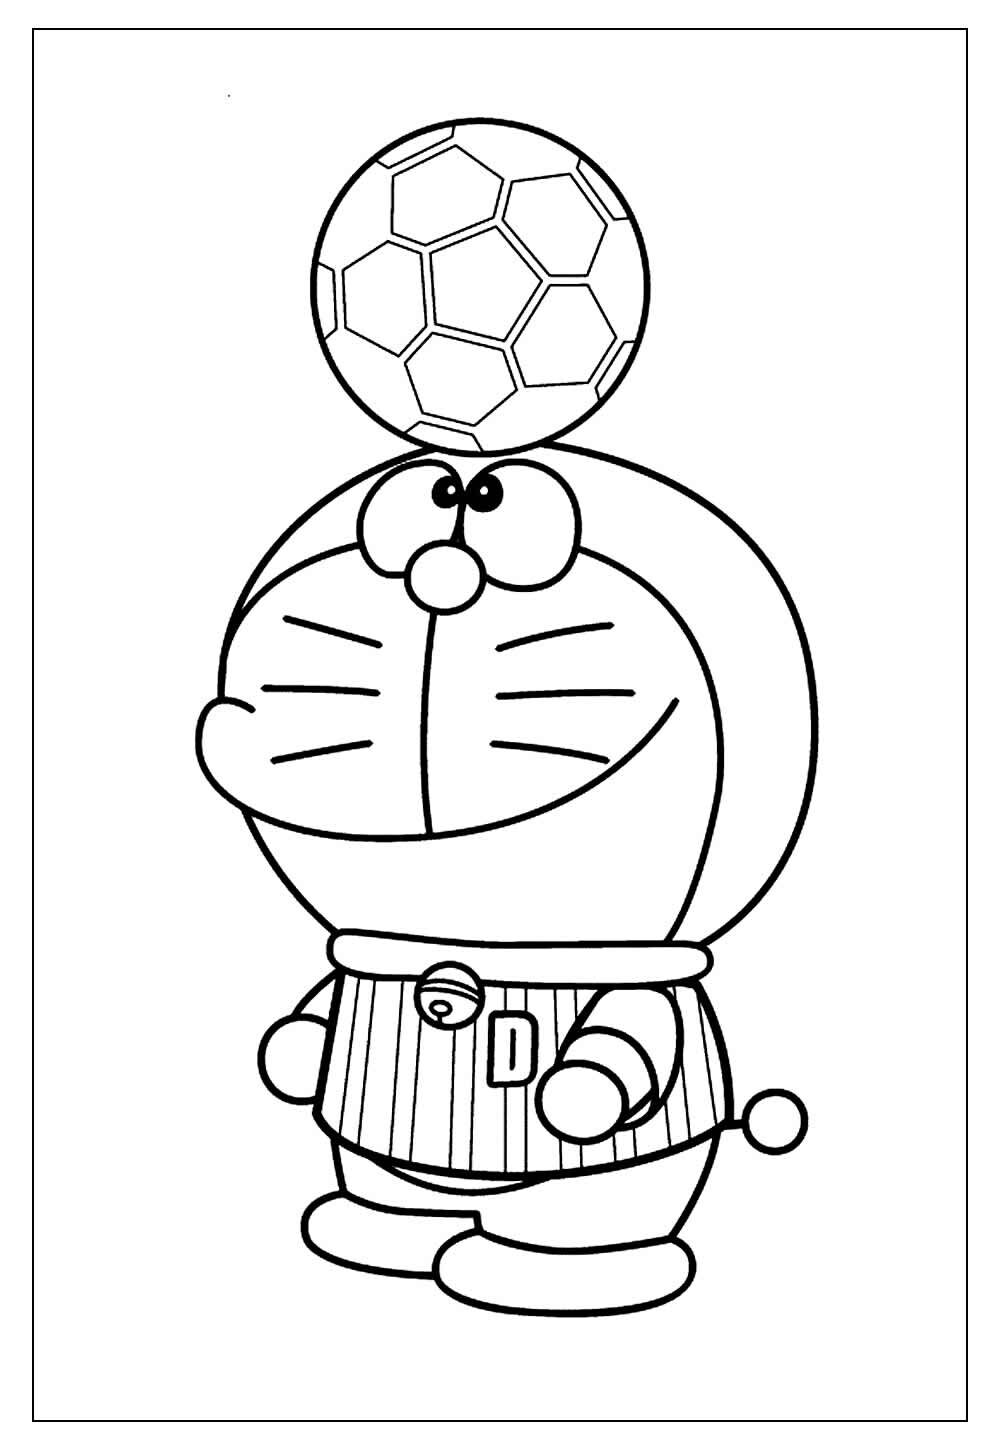 Desenho para pintar - Doraemon